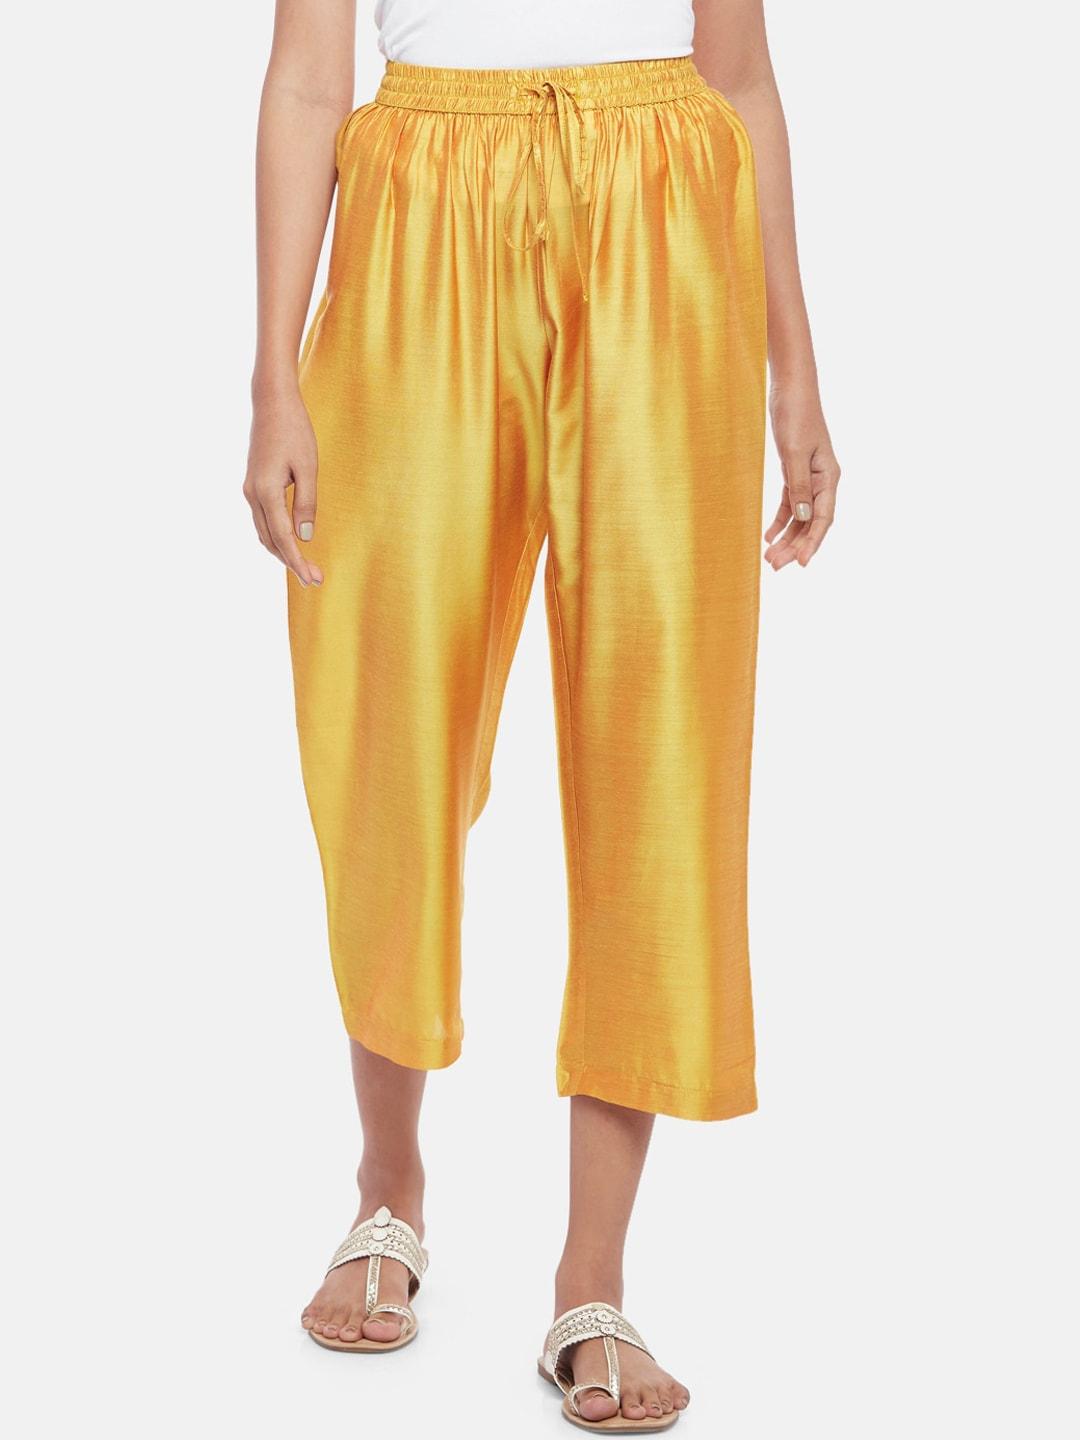 rangmanch by pantaloons women mustard yellow culottes trousers